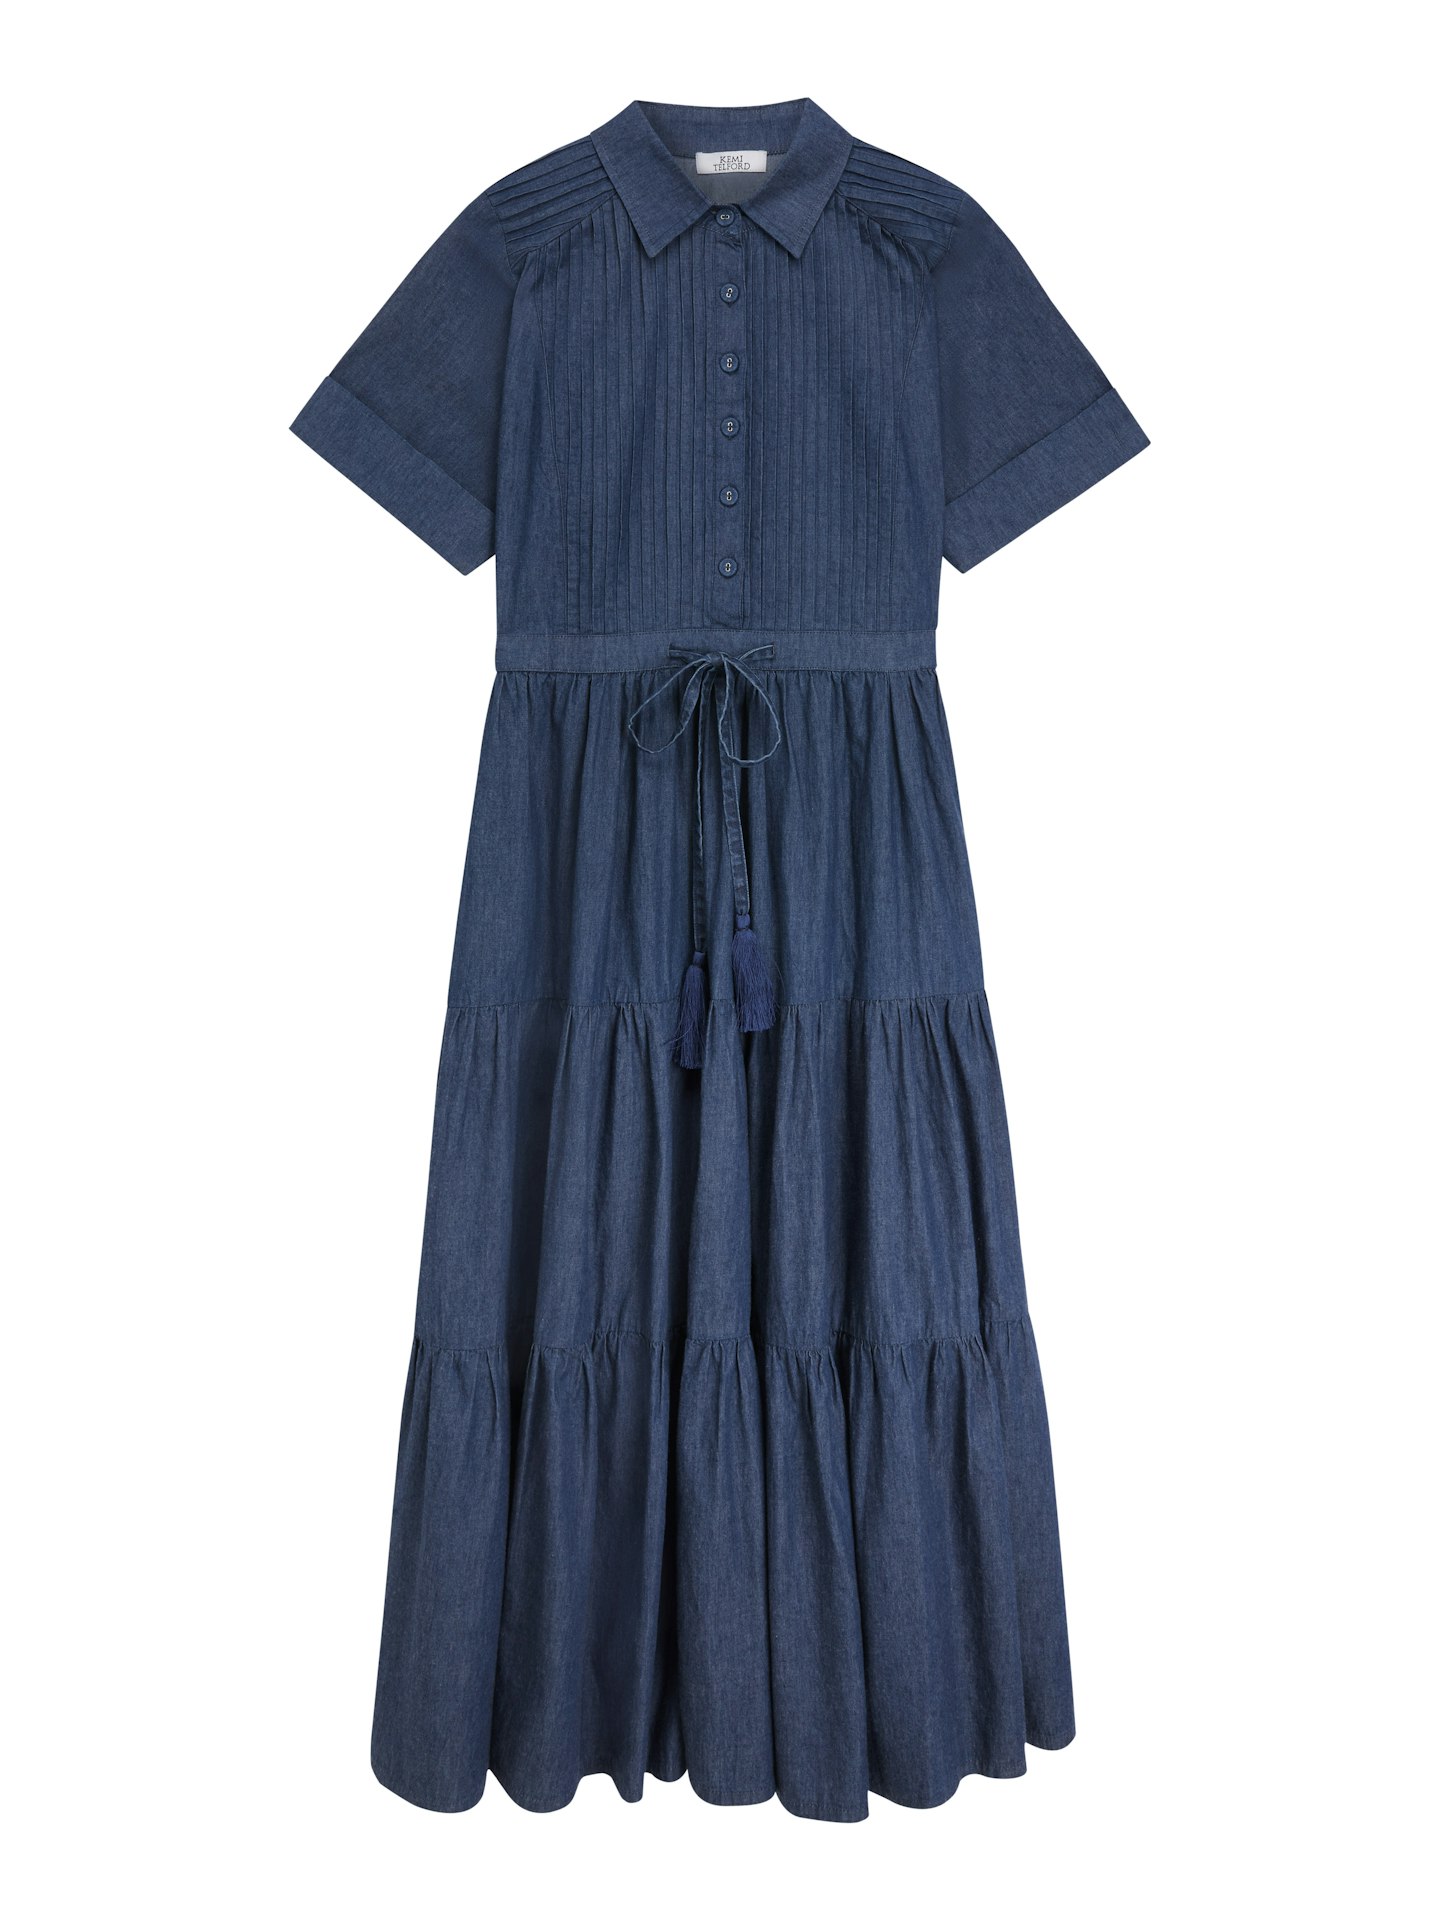 Kemi Telford, Denim Pintuck Dress, £130